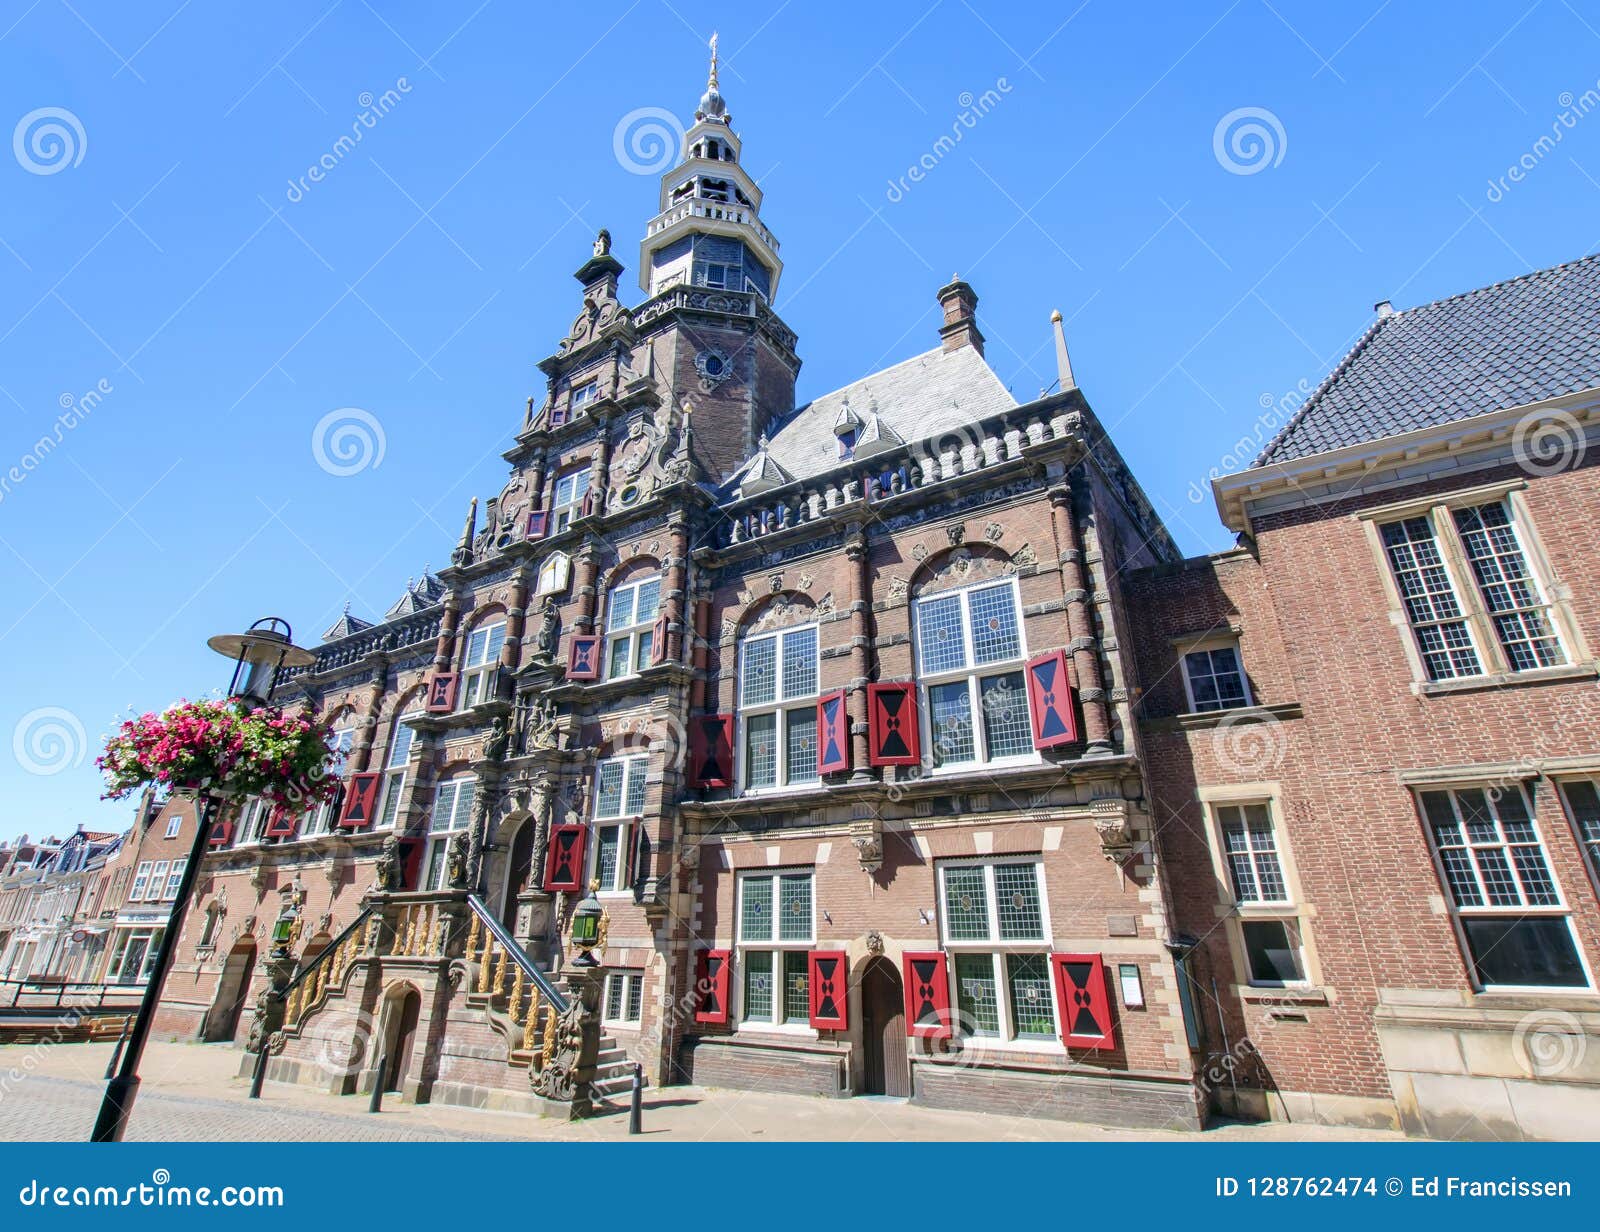 town hall in bolsward, friesland, netherlands